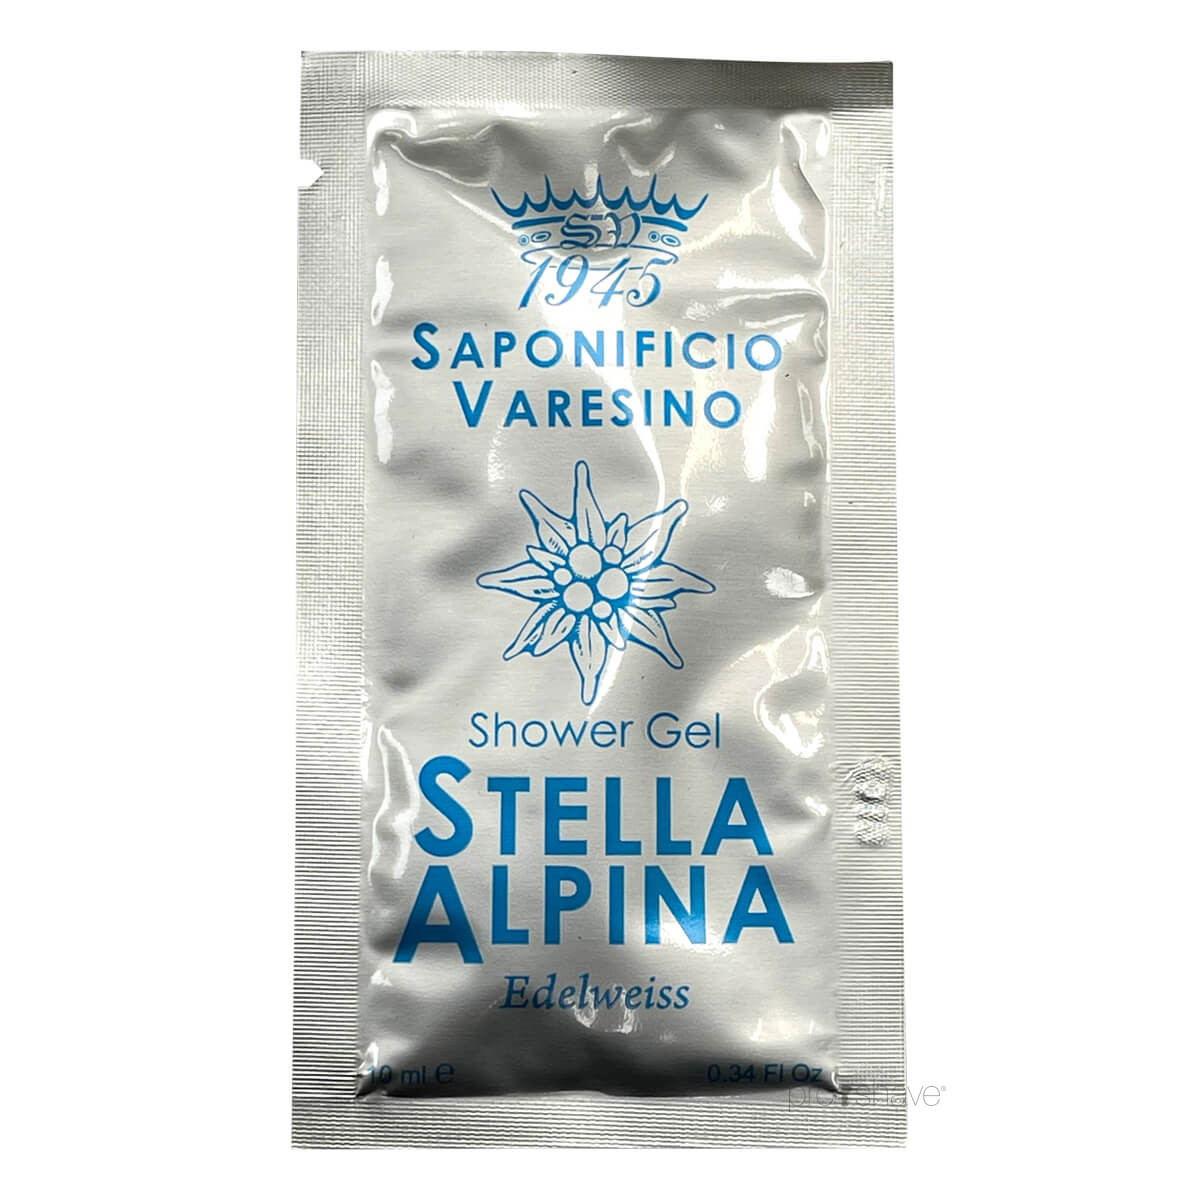 Billede af Saponificio Varesino Shower Gel, Stella Alpina, Sample, 10 ml.